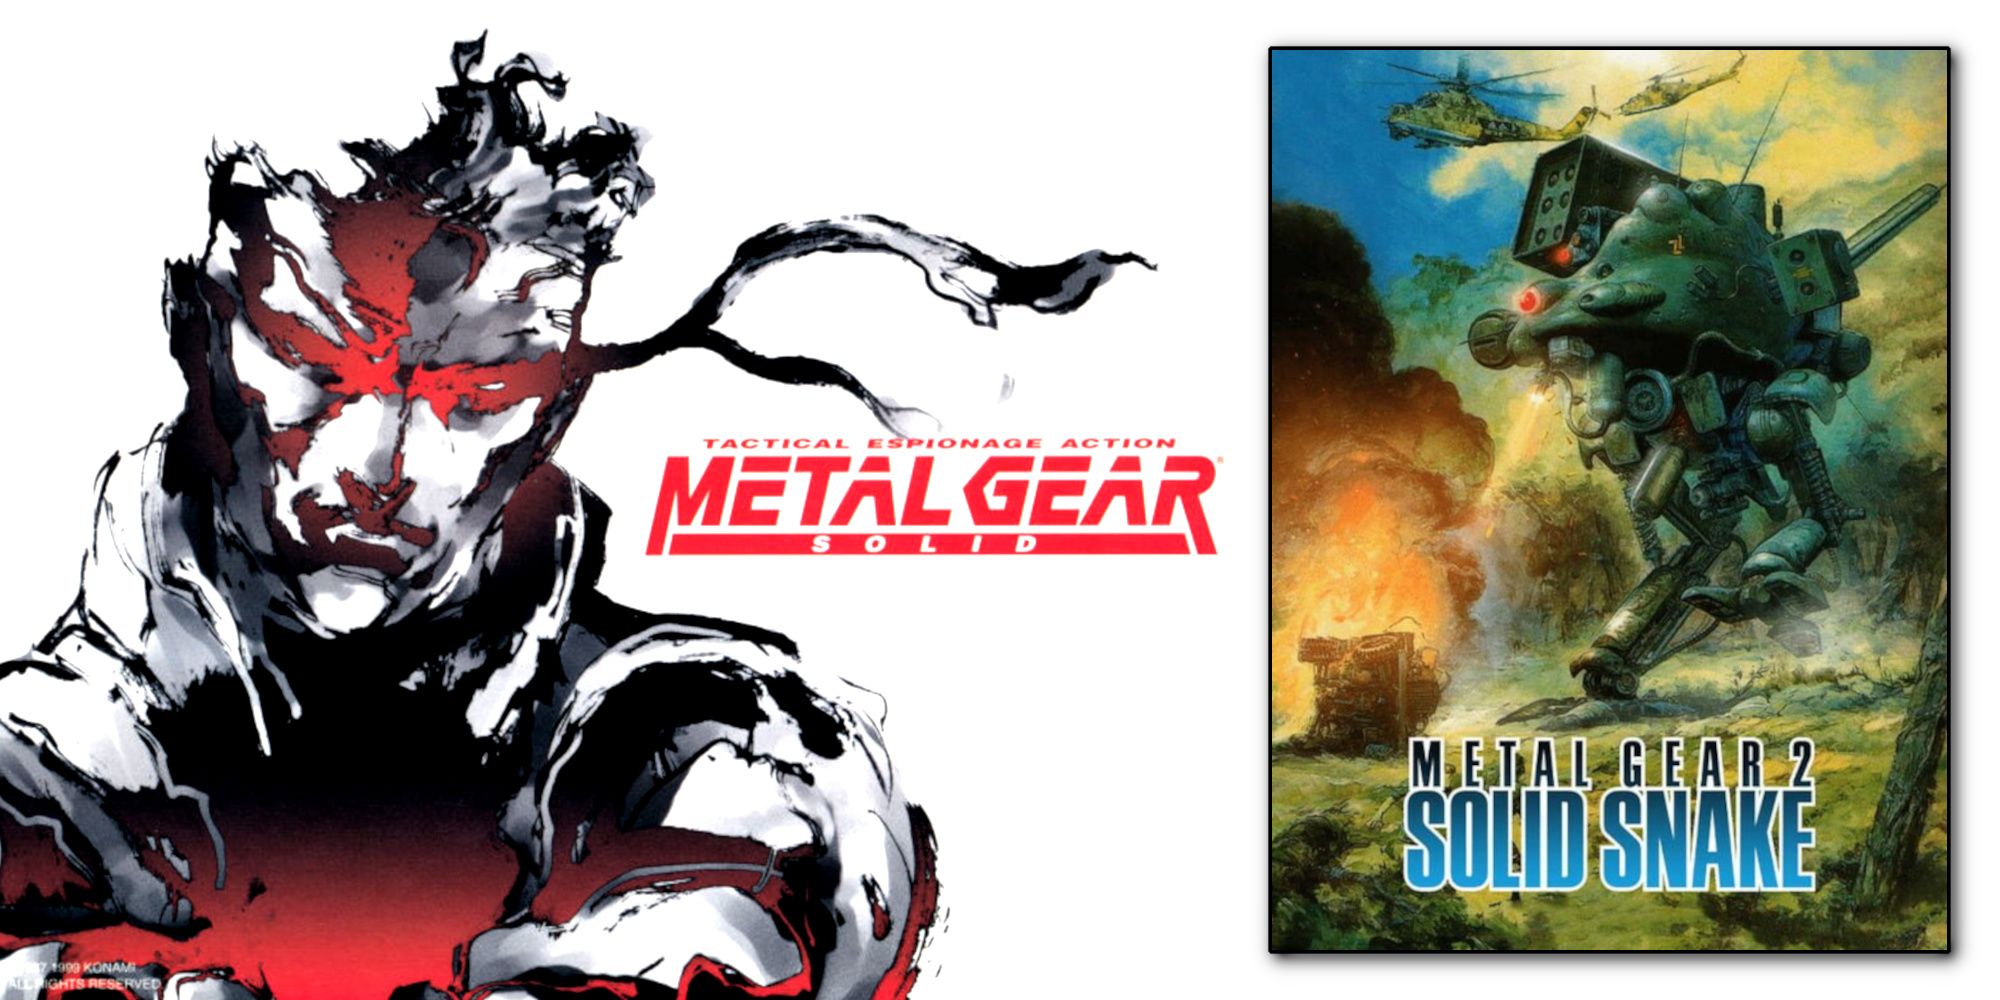 Metal Gear Solid Art by Yoji Shinkawa, Metal Gear 2 Solid Snake Box Art by Yoshiyuki Takani